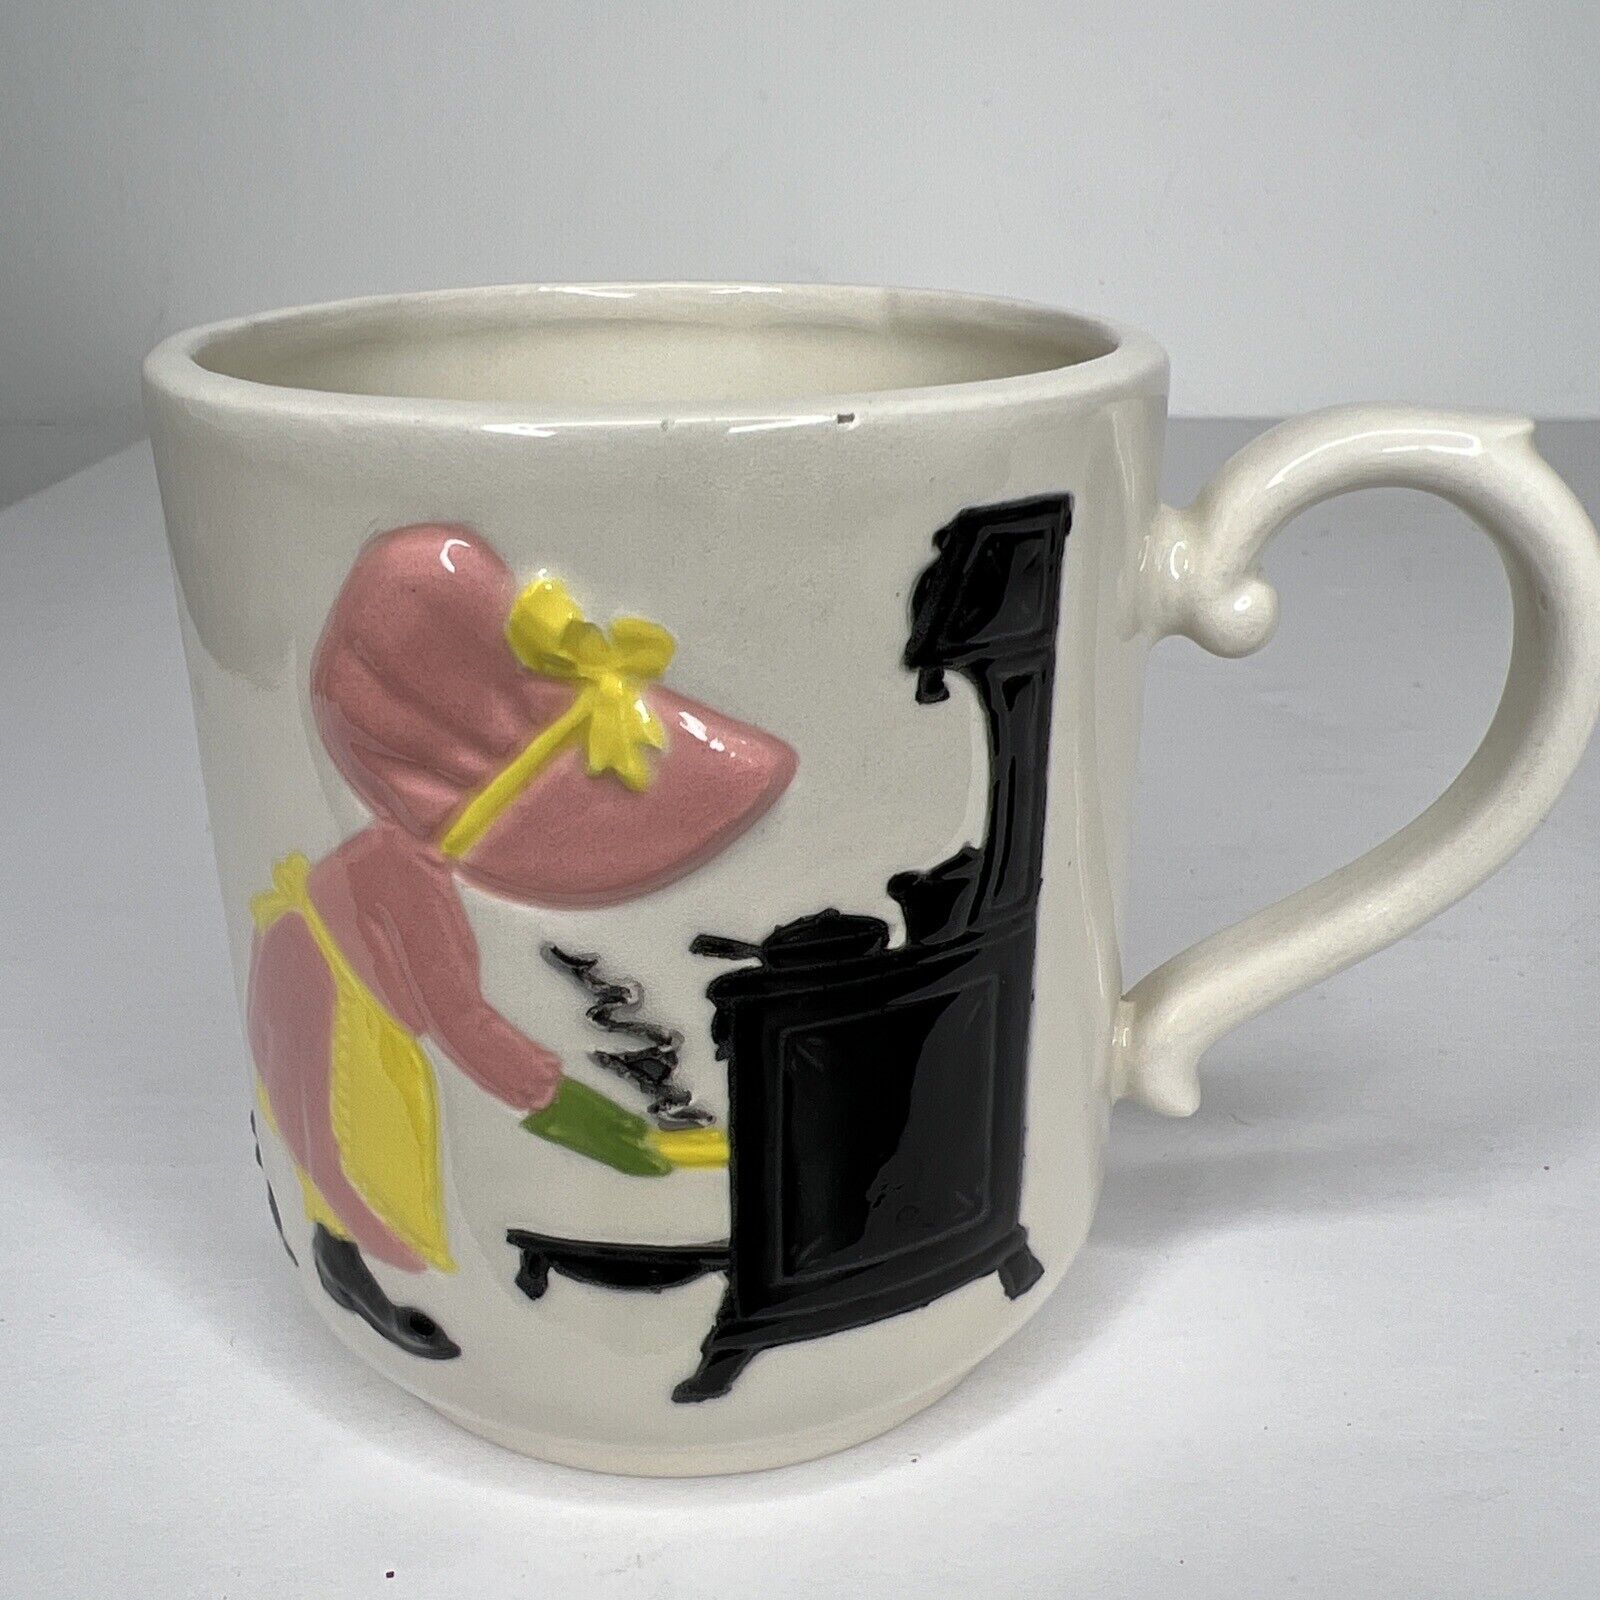 Vintage Tea Cup Coffee Mug 1976 Hand Painted  “Home Sweet Home” Black Stove Pink